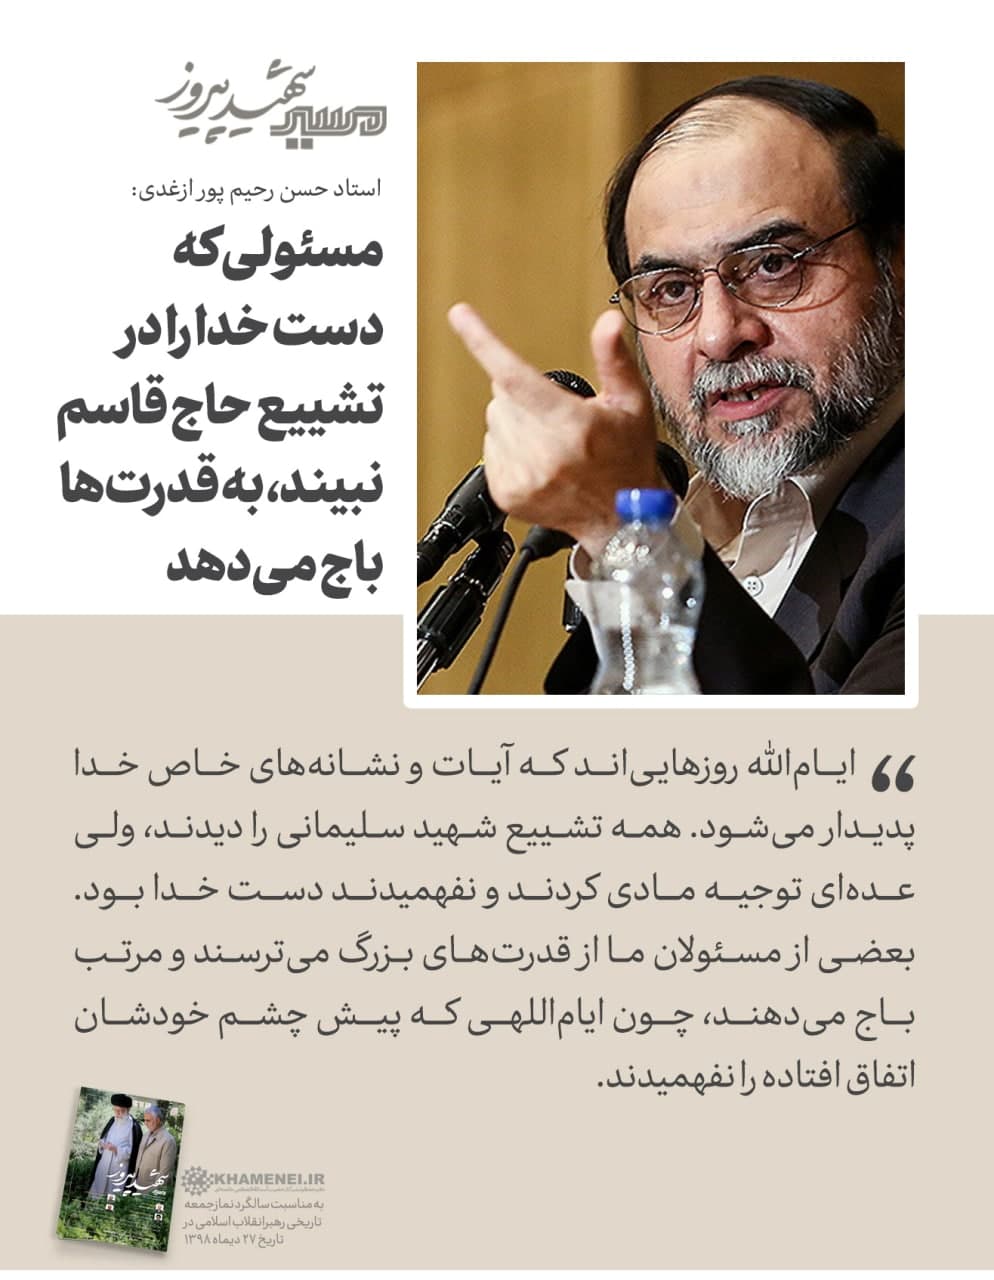 https://idc0-cdn0.khamenei.ir/ndata/news/47276/photo_2021-02-15_10-55-48.jpg